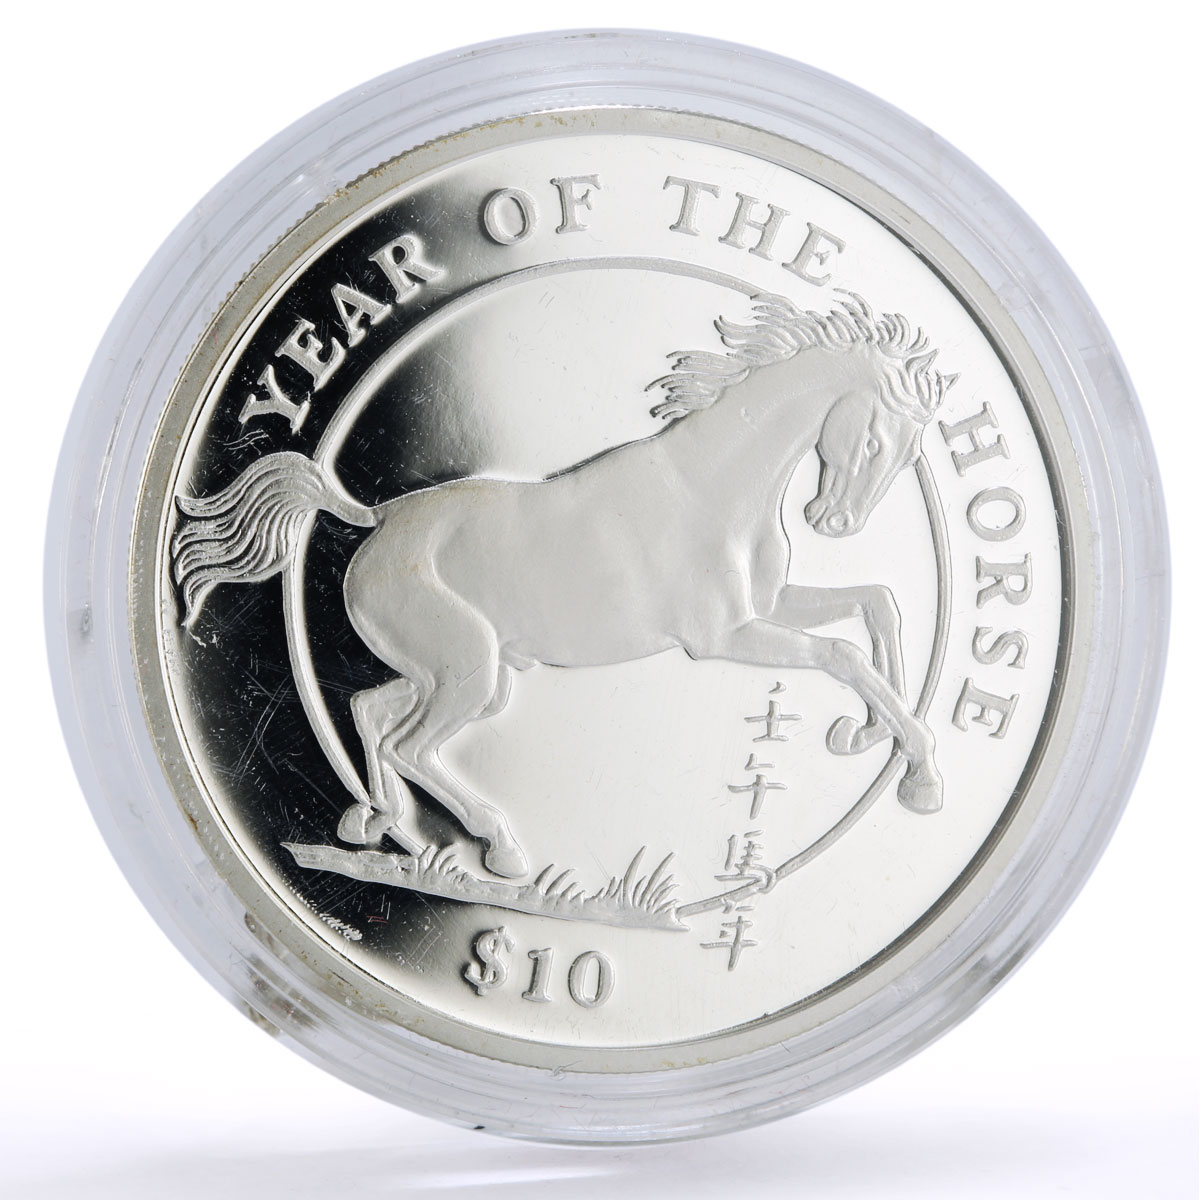 Sierra Leone 10 dollars Lunar Calendar Year of the Horse proof silver coin 2002